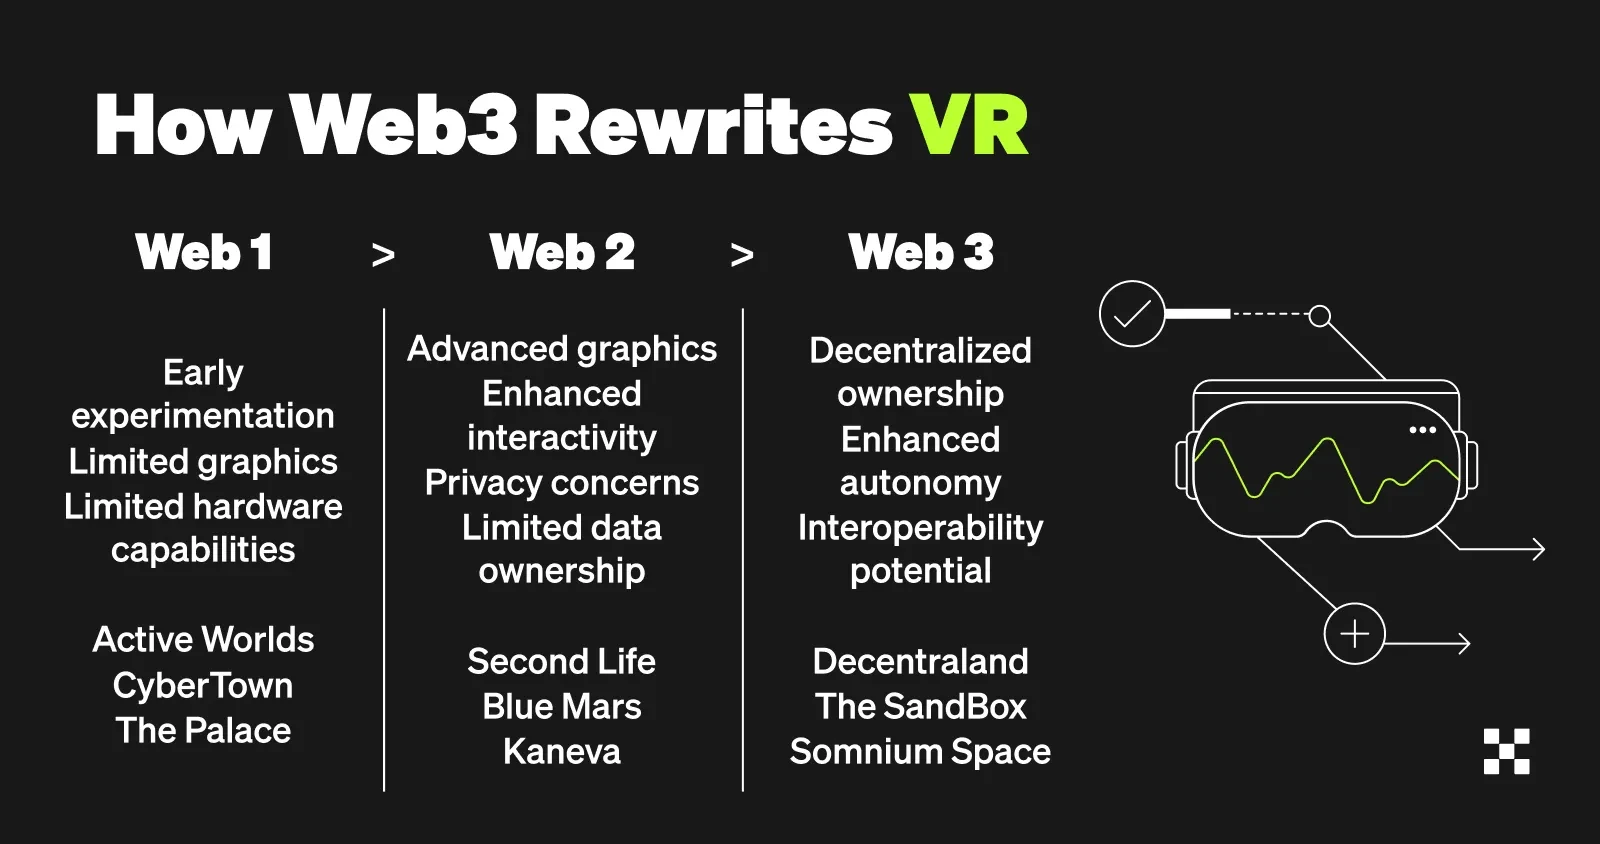 How Web3 rewrites VR